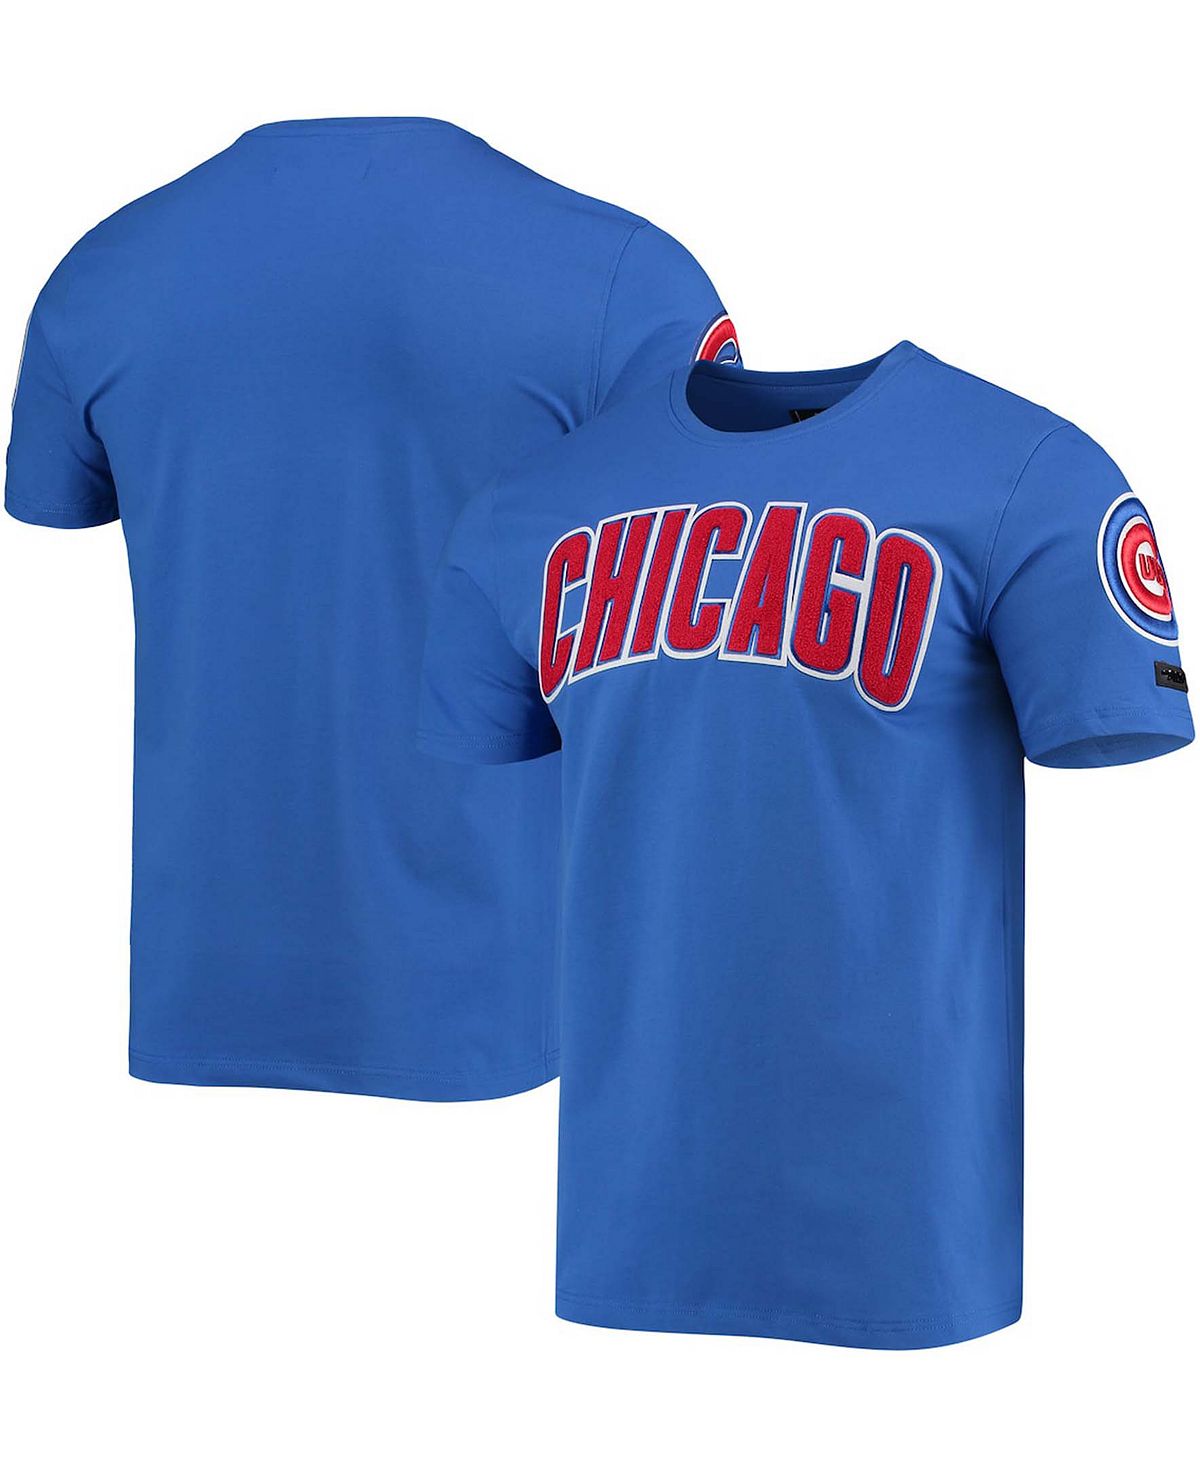 Мужская футболка с логотипом команды royal chicago cubs team Pro Standard